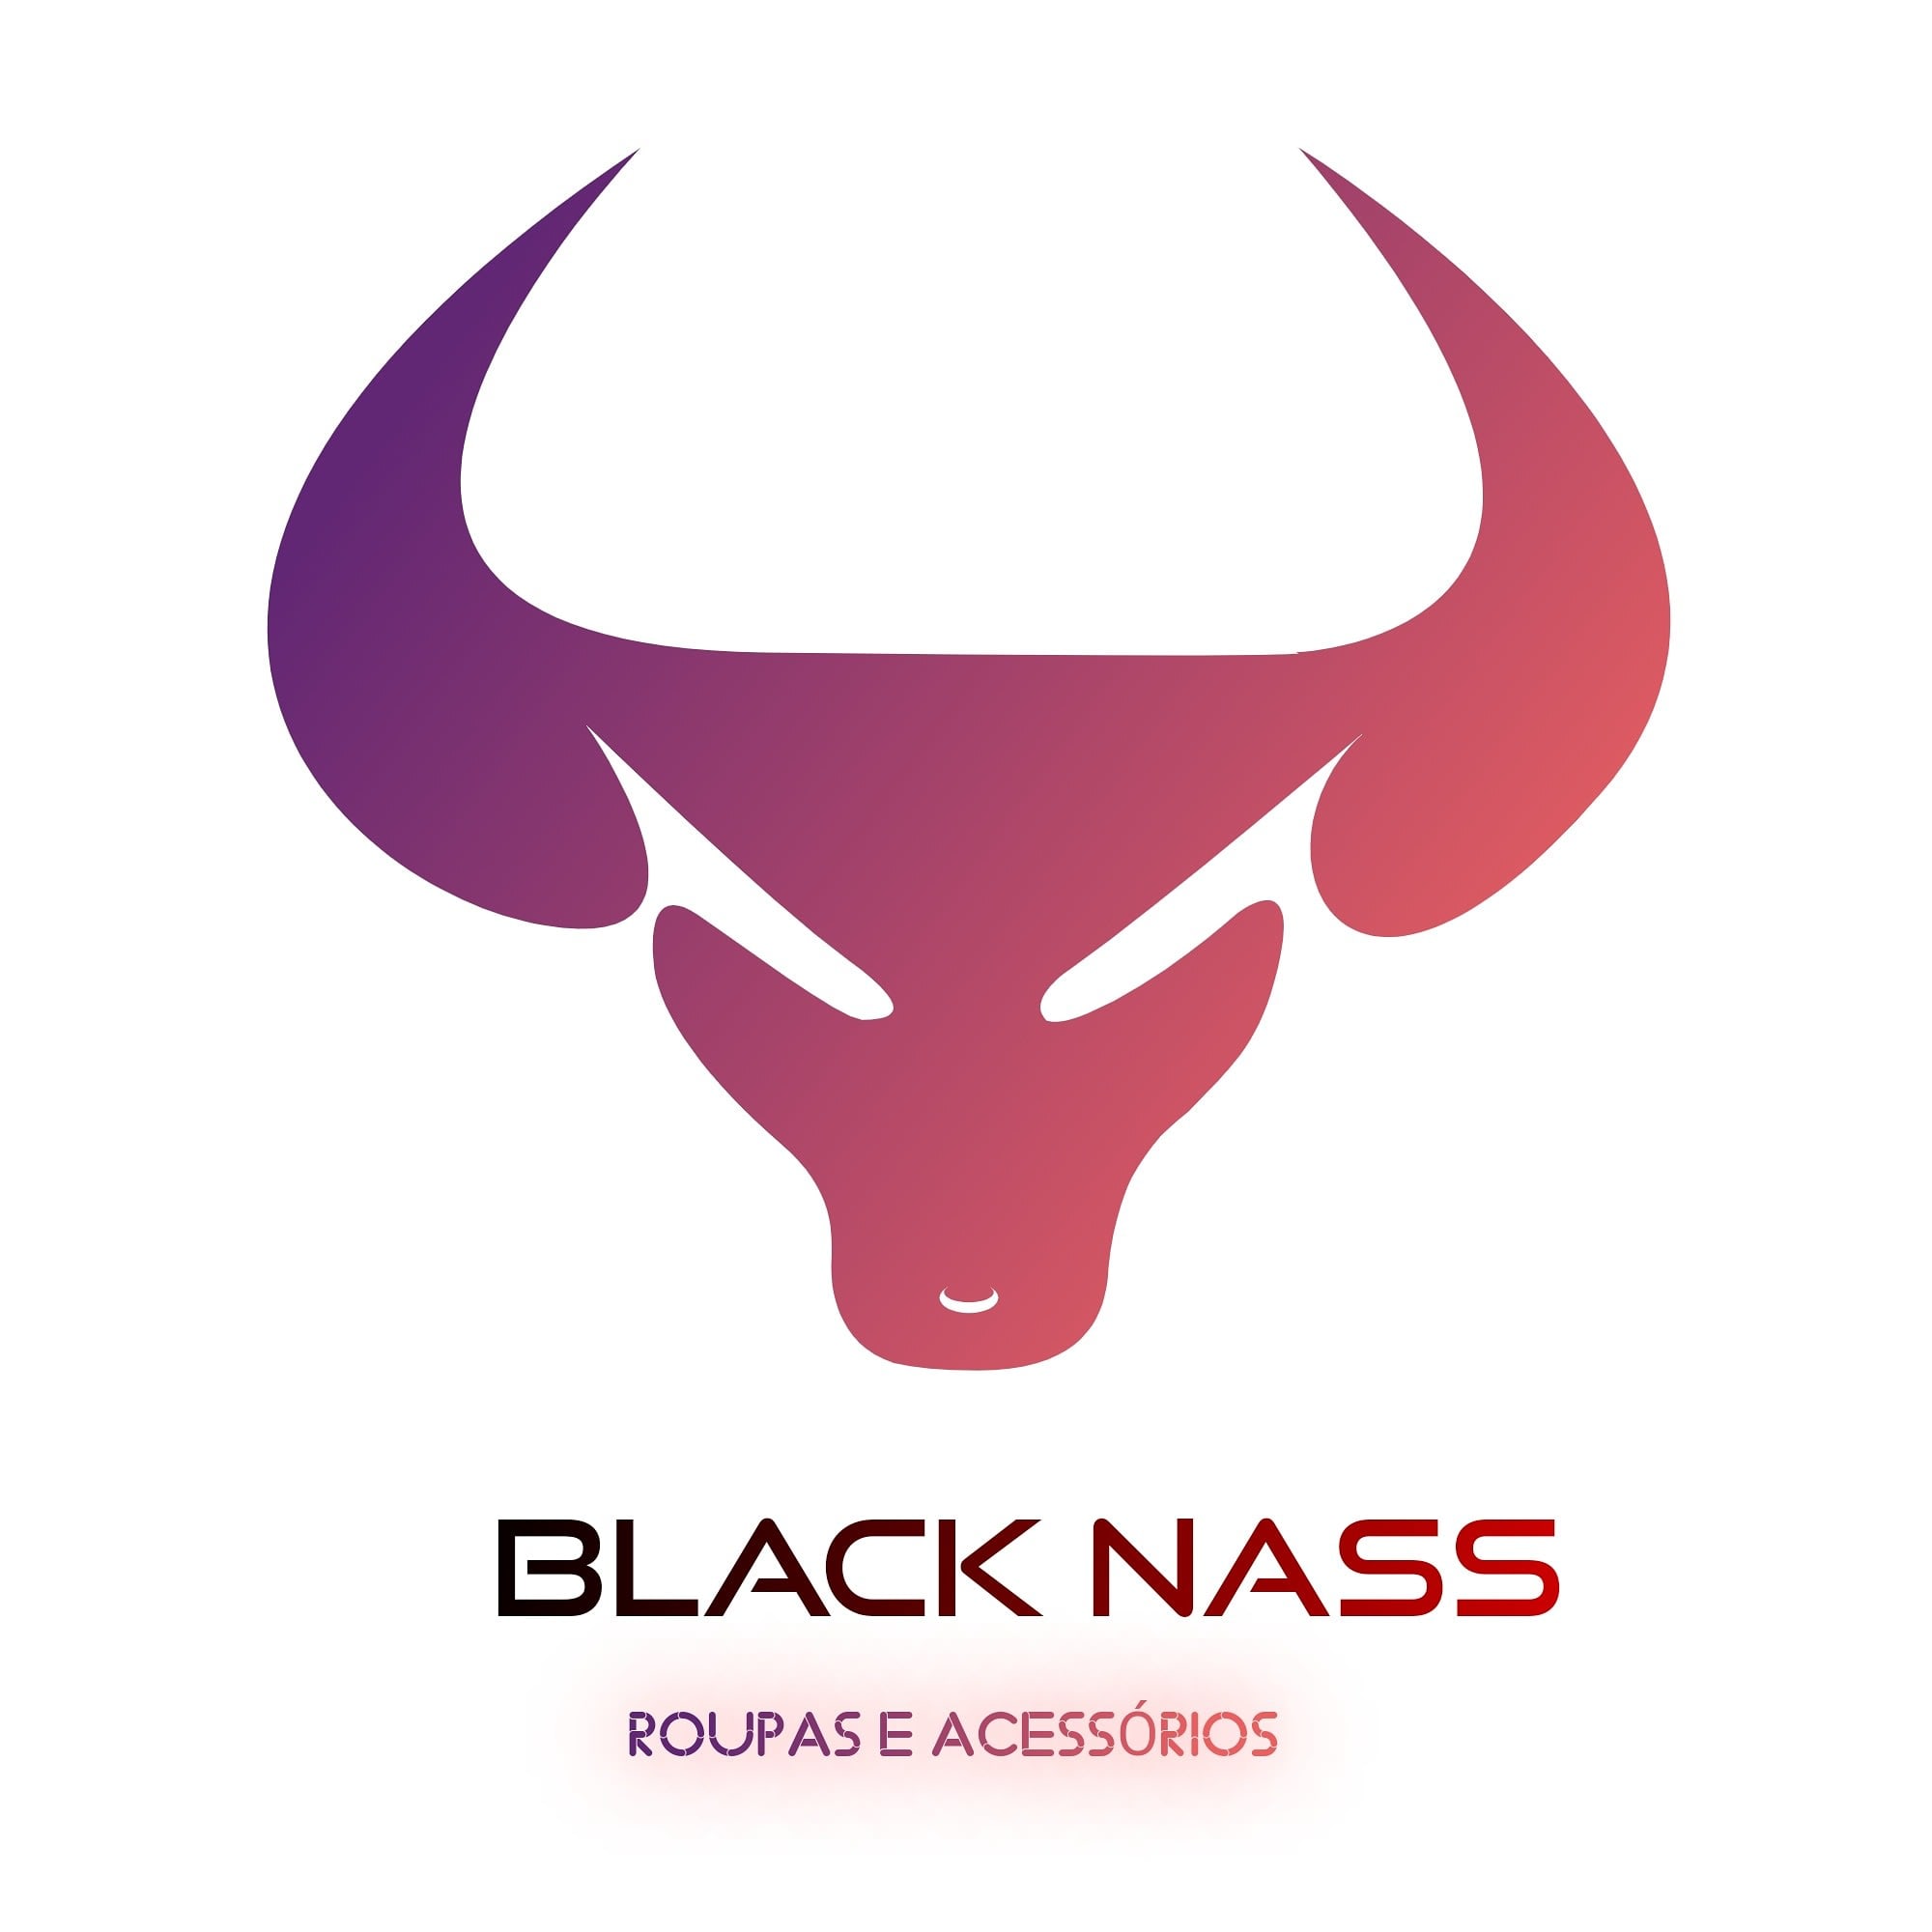 Black Nass